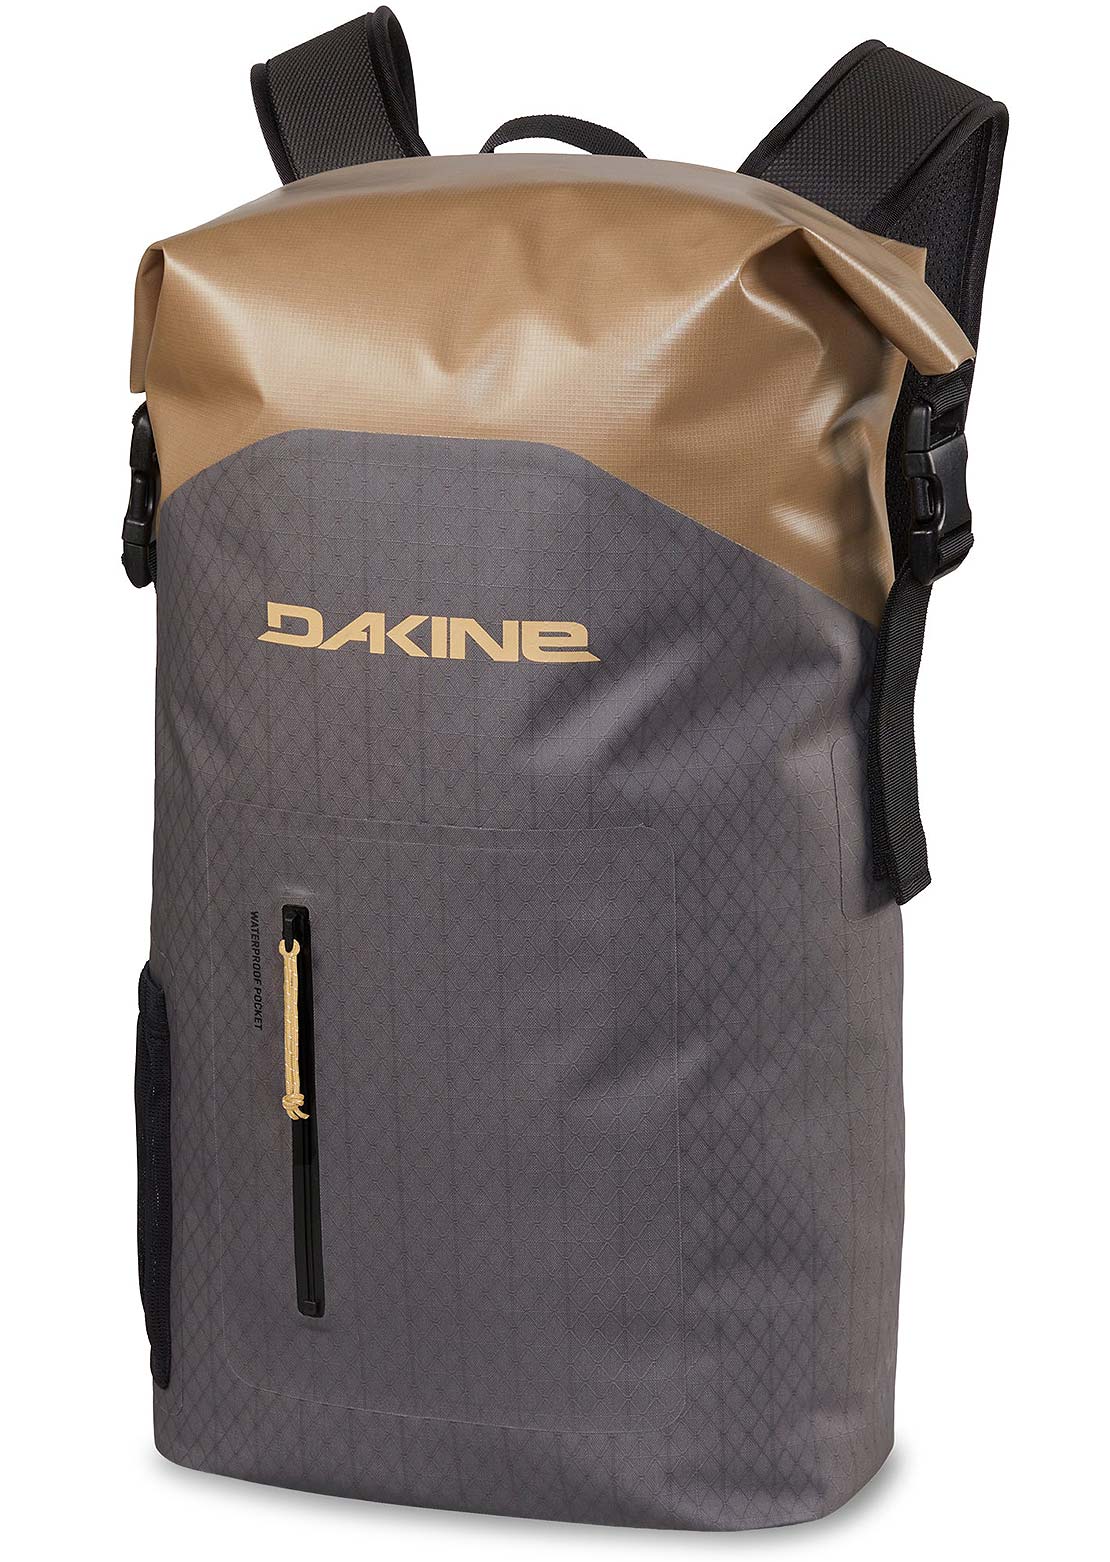 Dakine Cyclone Lt Wet/Dry Rolltop 30L Backpack Catlerock/Stone